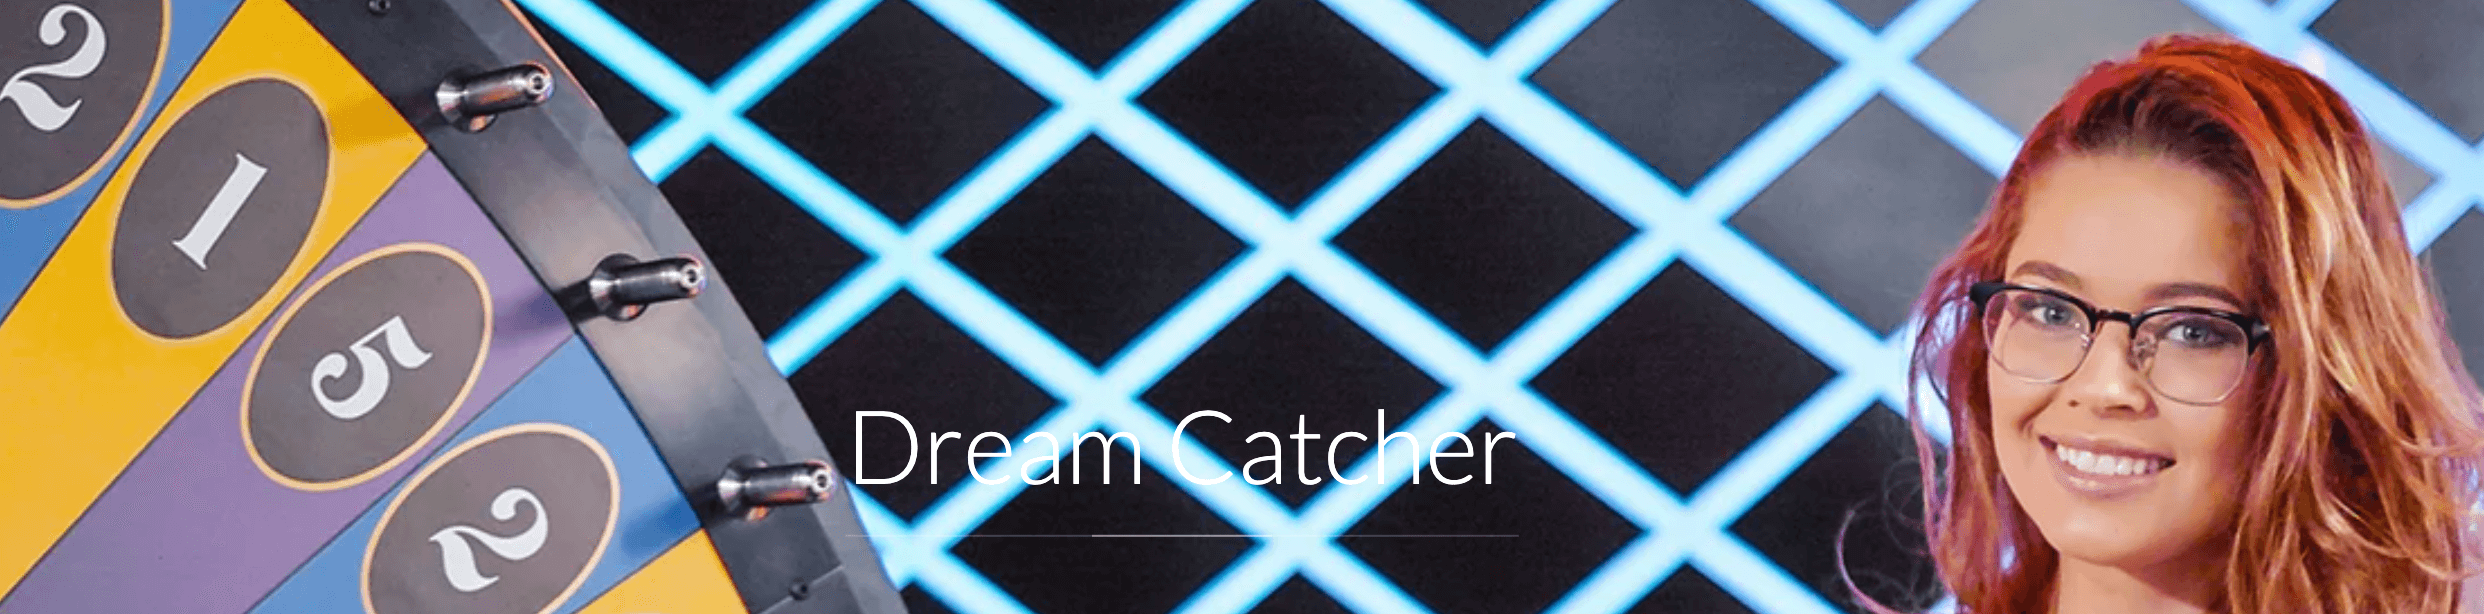 Game Show Dream Catcher casino online